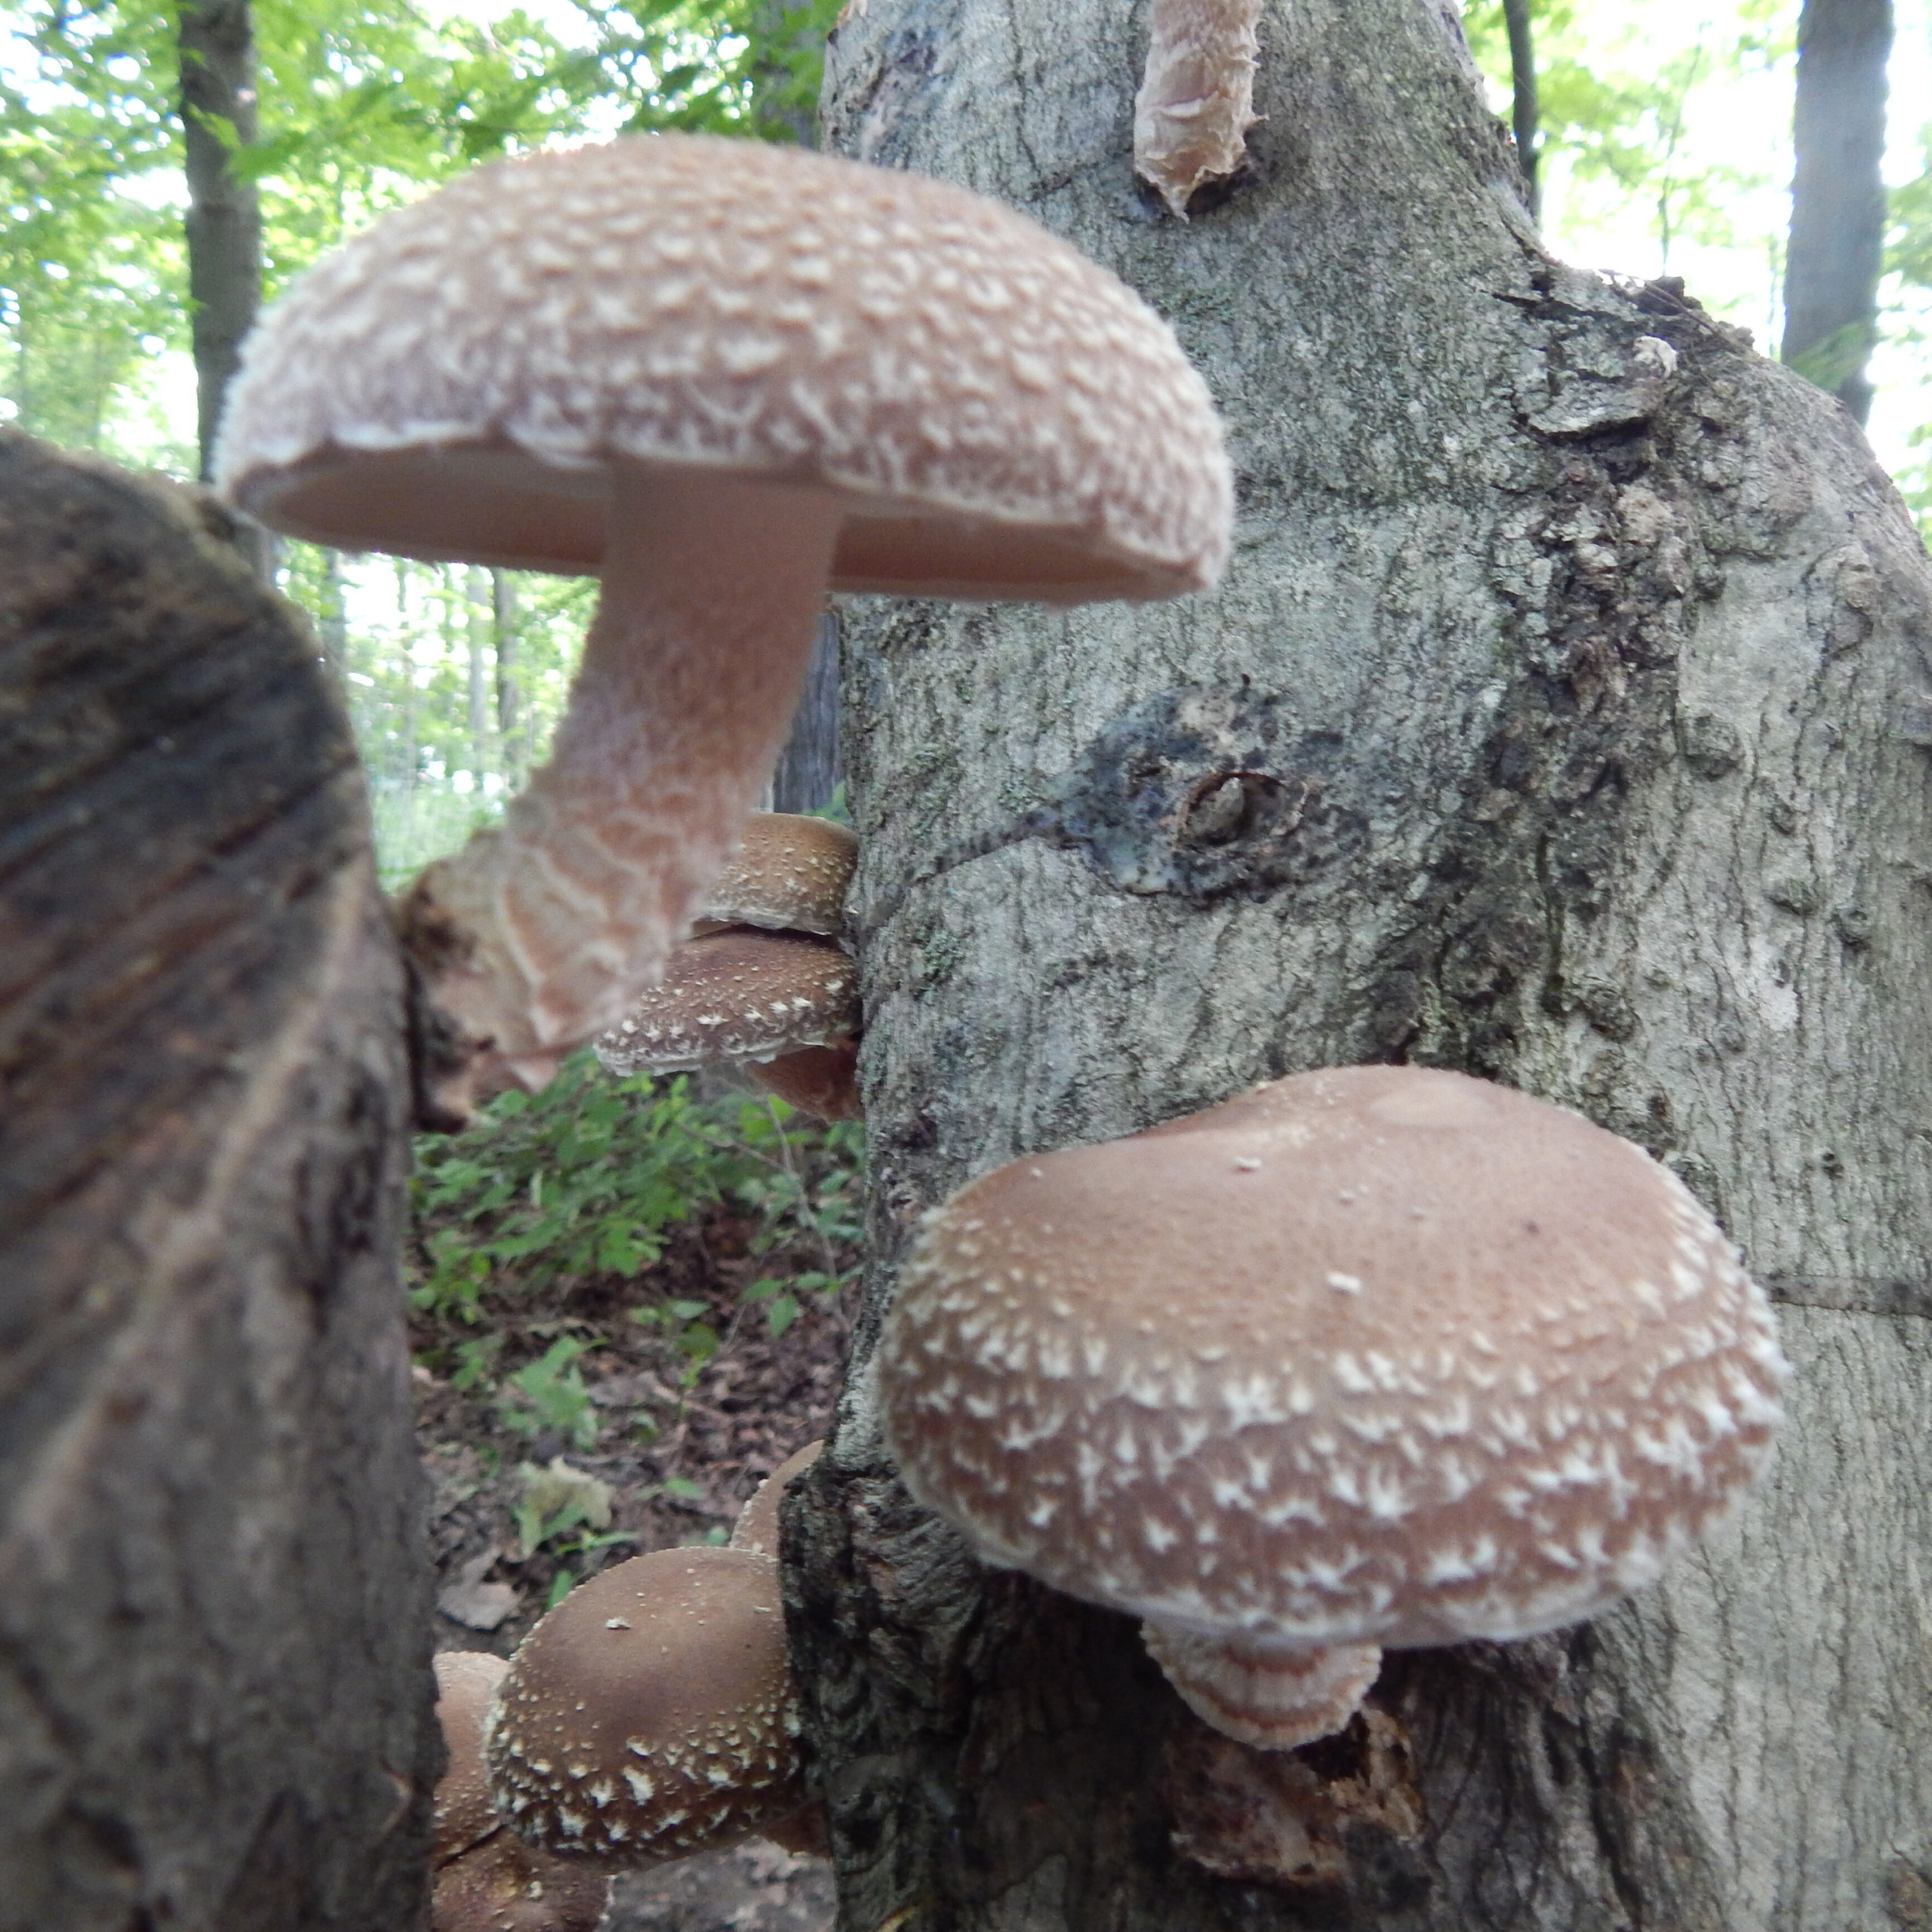 Shiitake mushrooms grow on a log